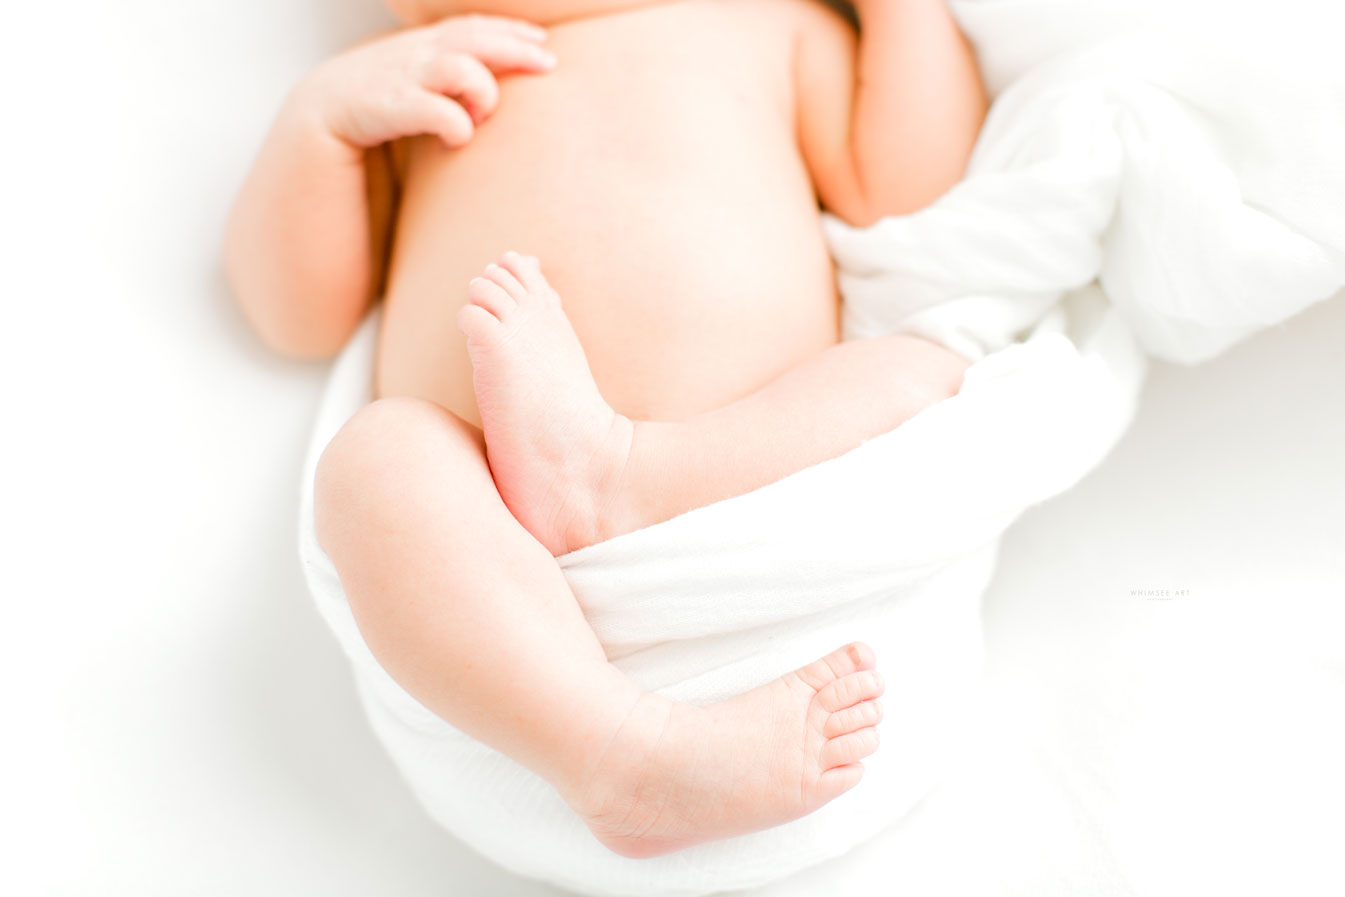 Virginia's Best Newborn Photographer | Newborn and Family  Studio Session| Whimsee Art Photography